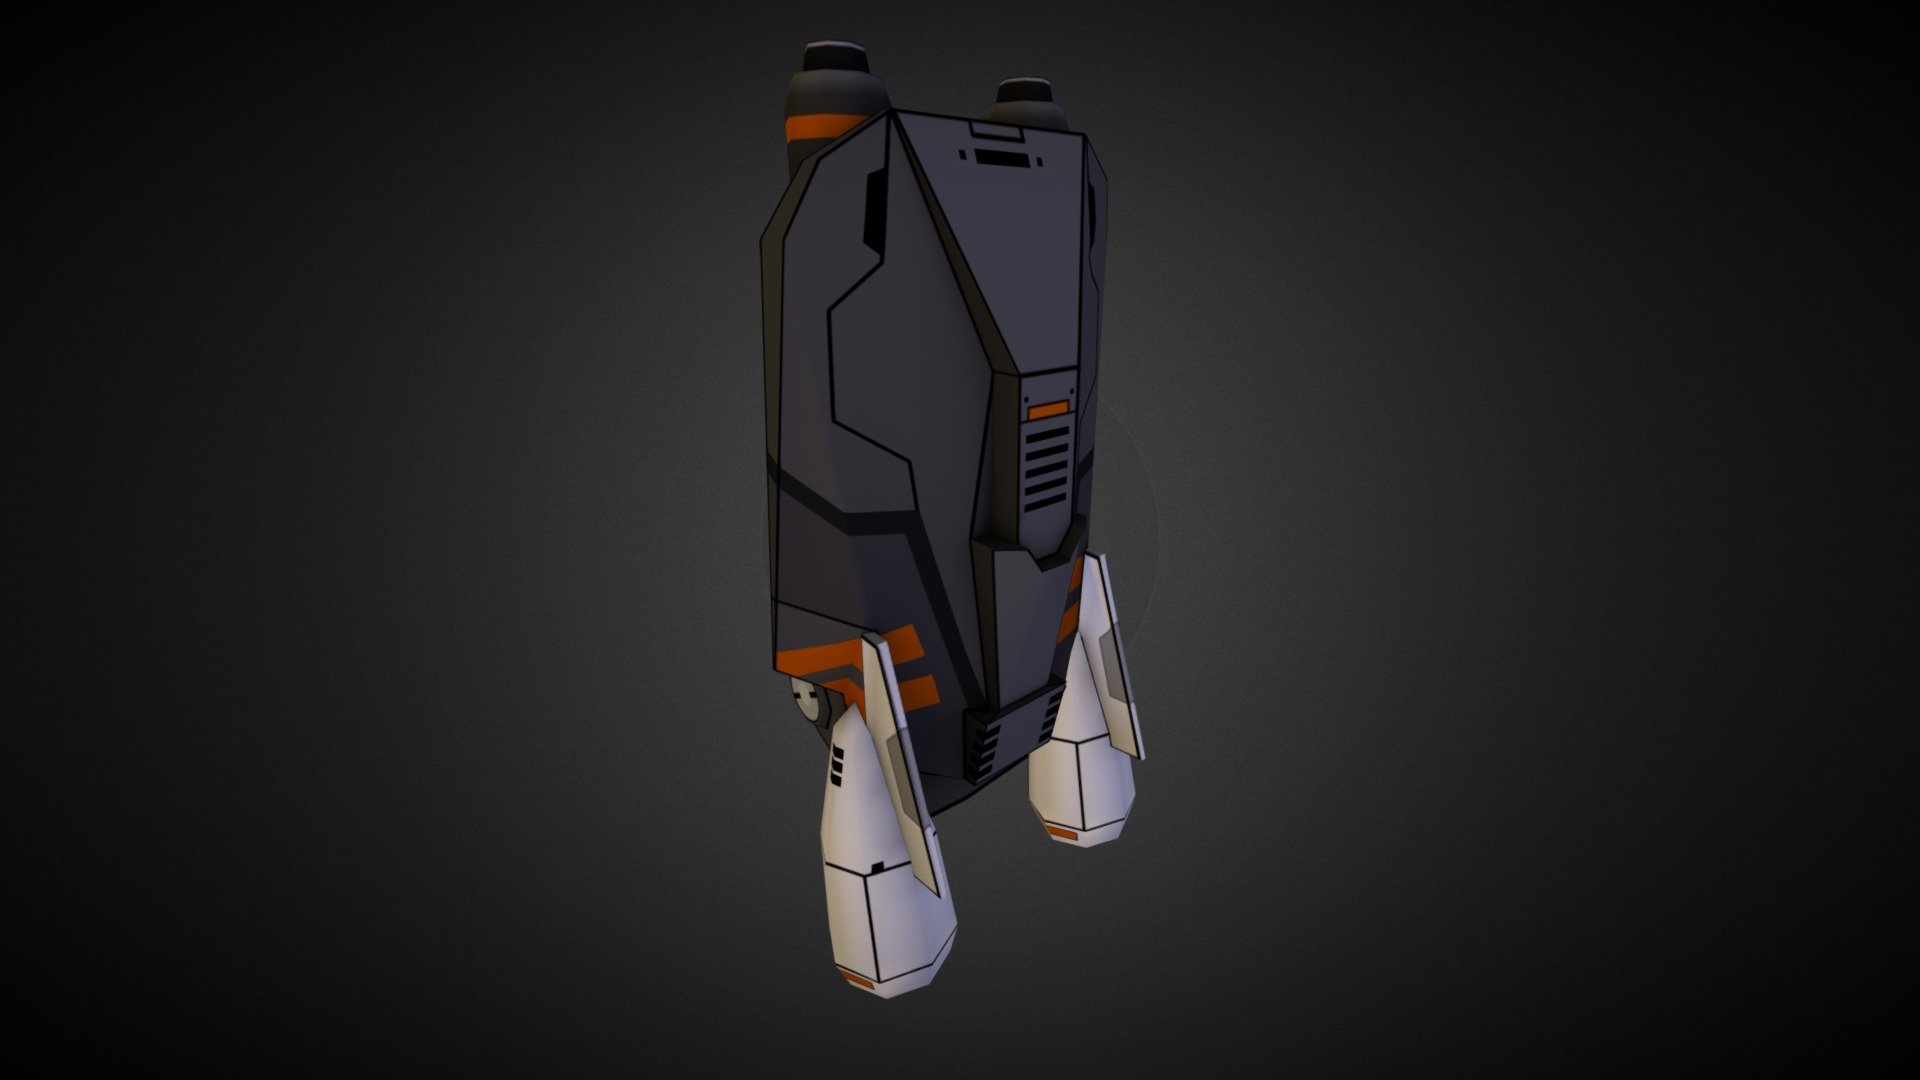 Jetpack - 3D model by Explosive (@kristopher.patrick.peterson) 3d model